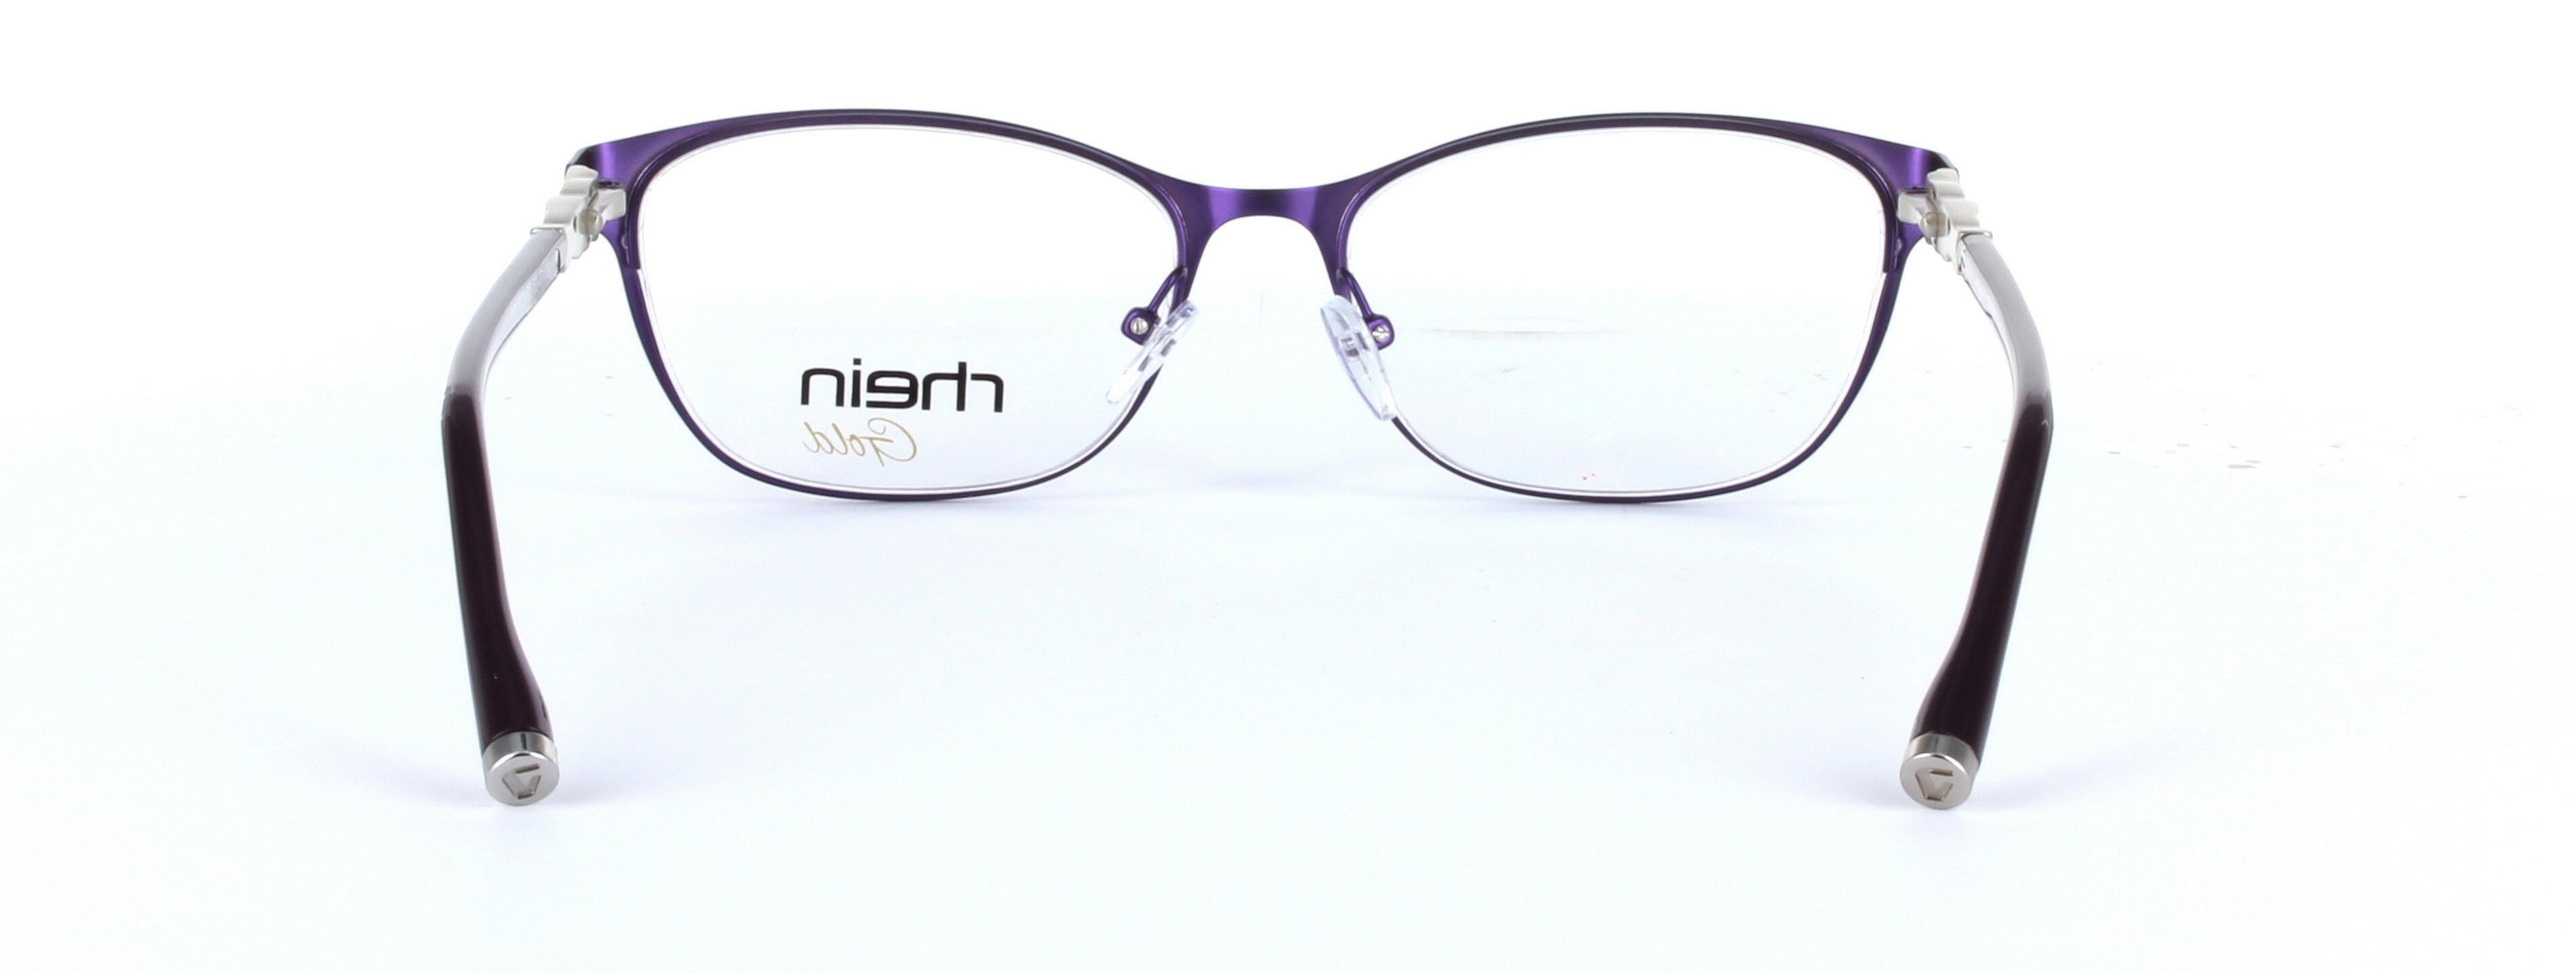 Nova Purple Full Rim Oval Round Metal Glasses - Image View 3